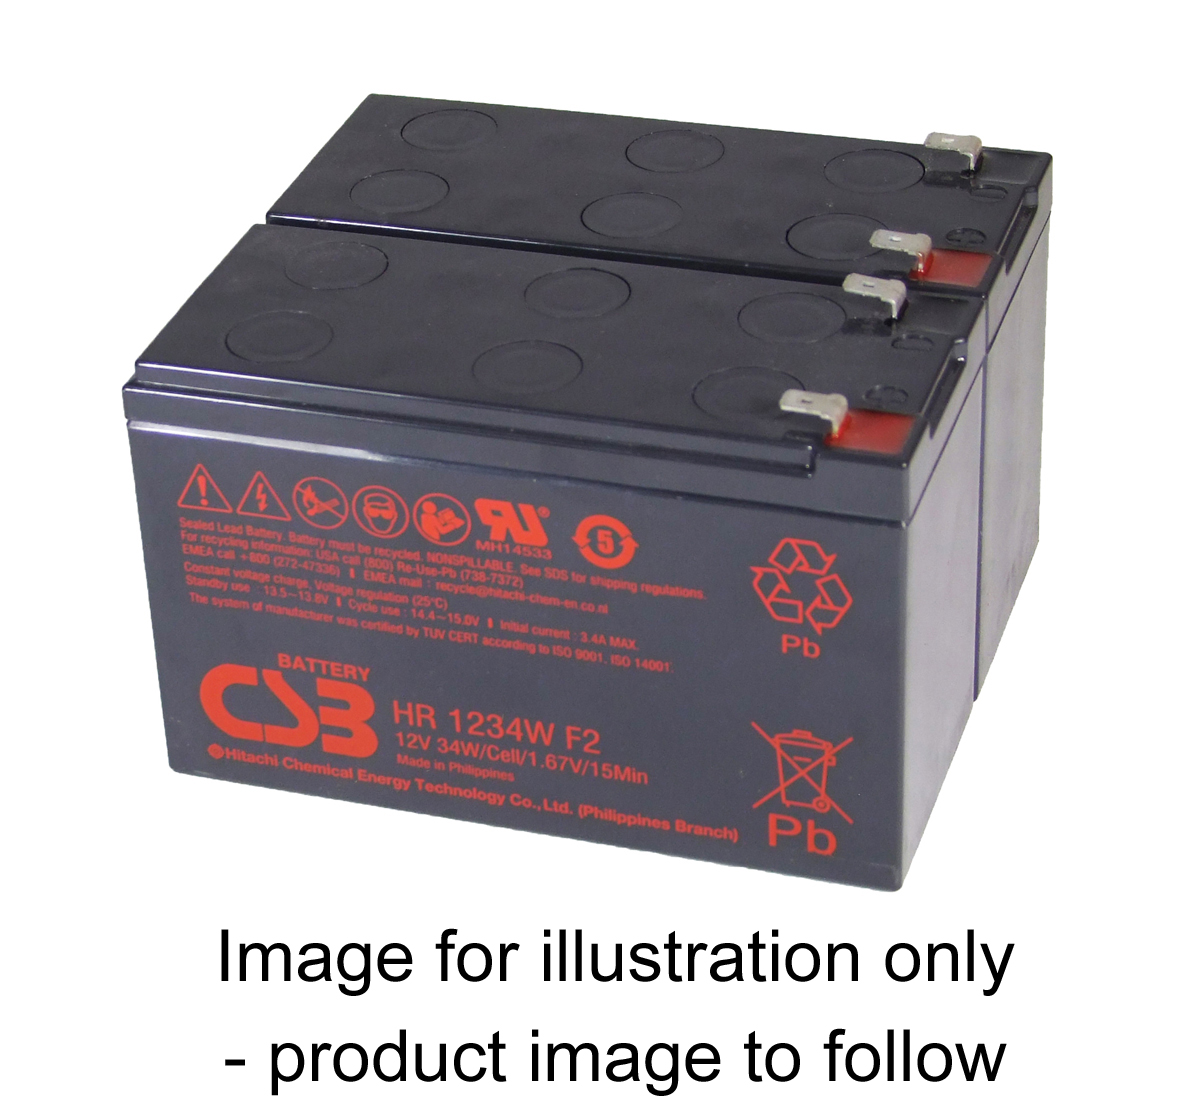 MDSV200 UPS Battery Kit - Replaces APC RBCV200